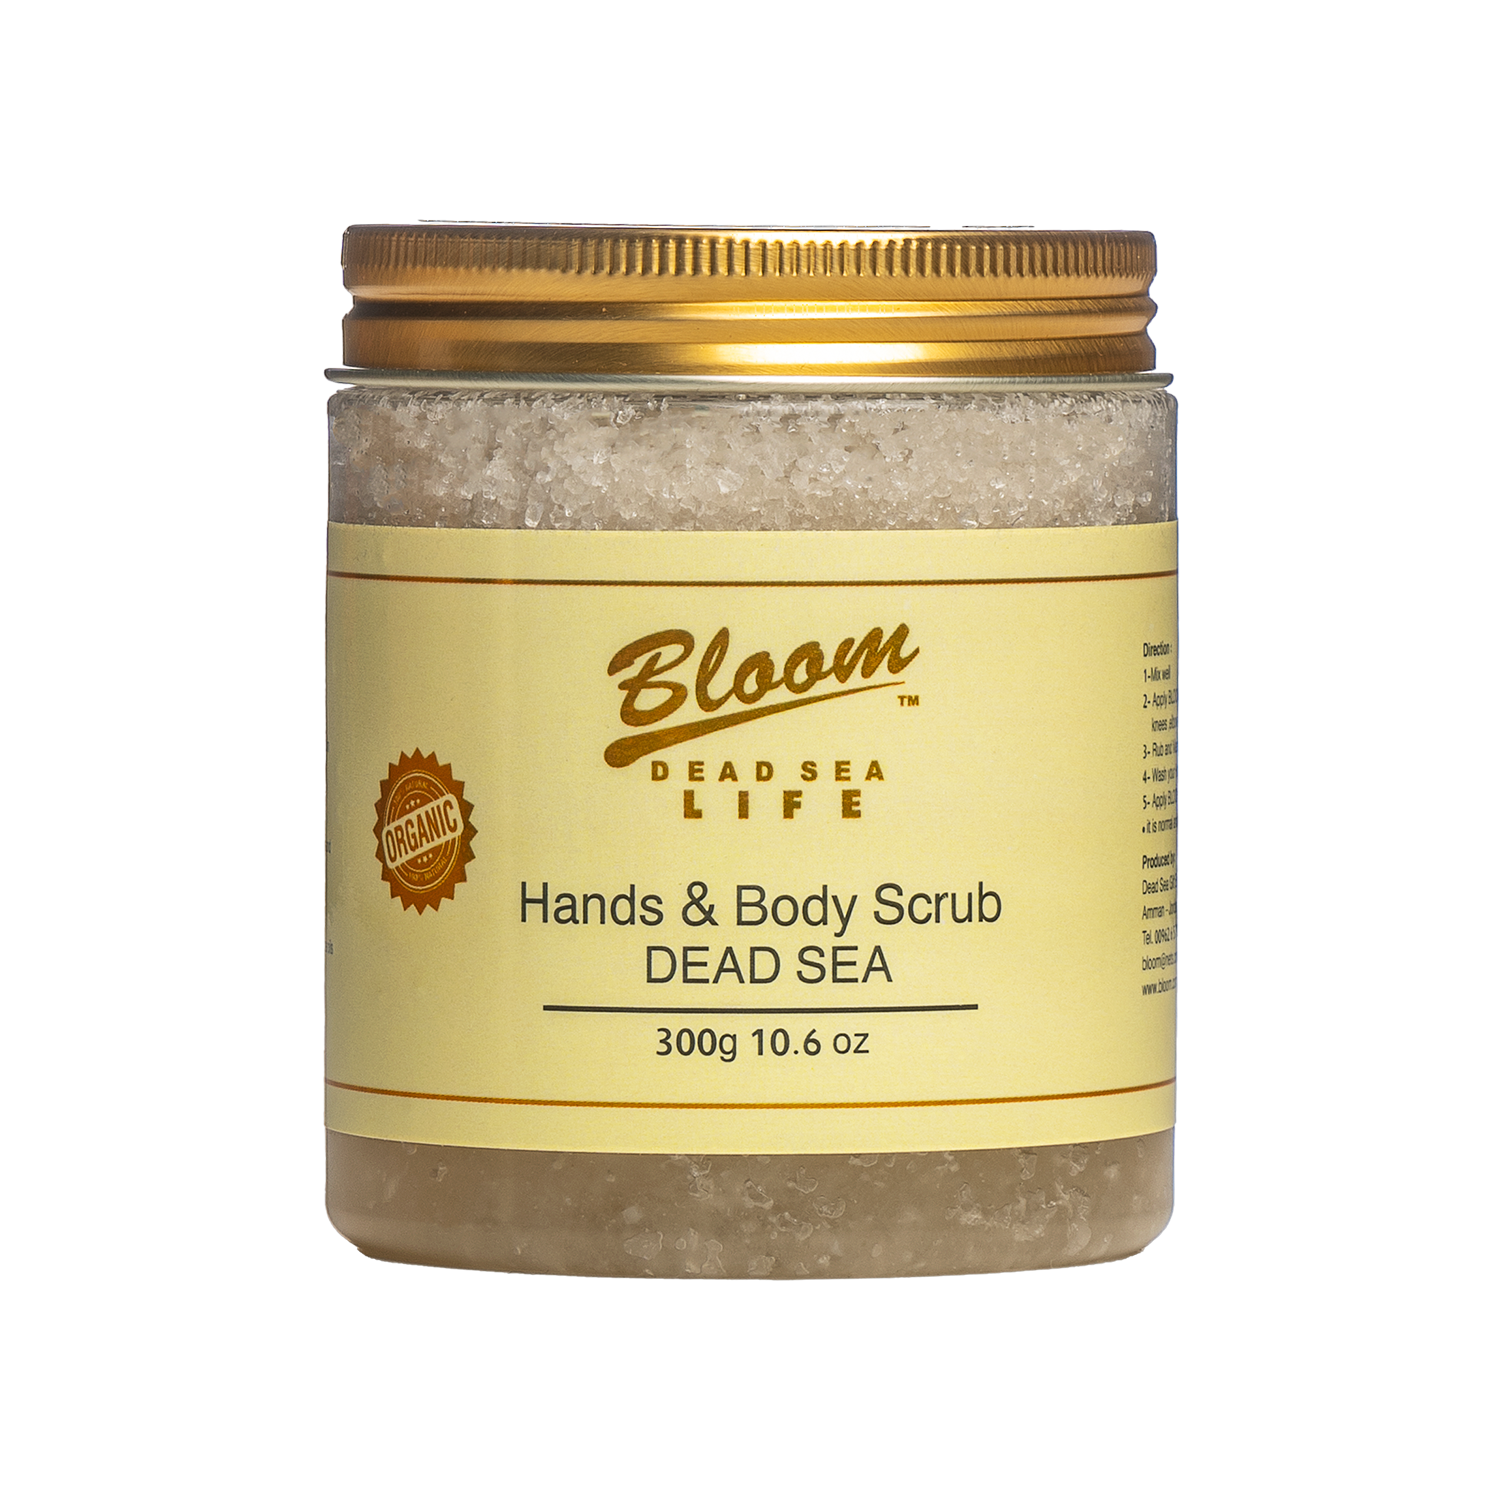 Hands and Body scrub Bloom Dead Sea